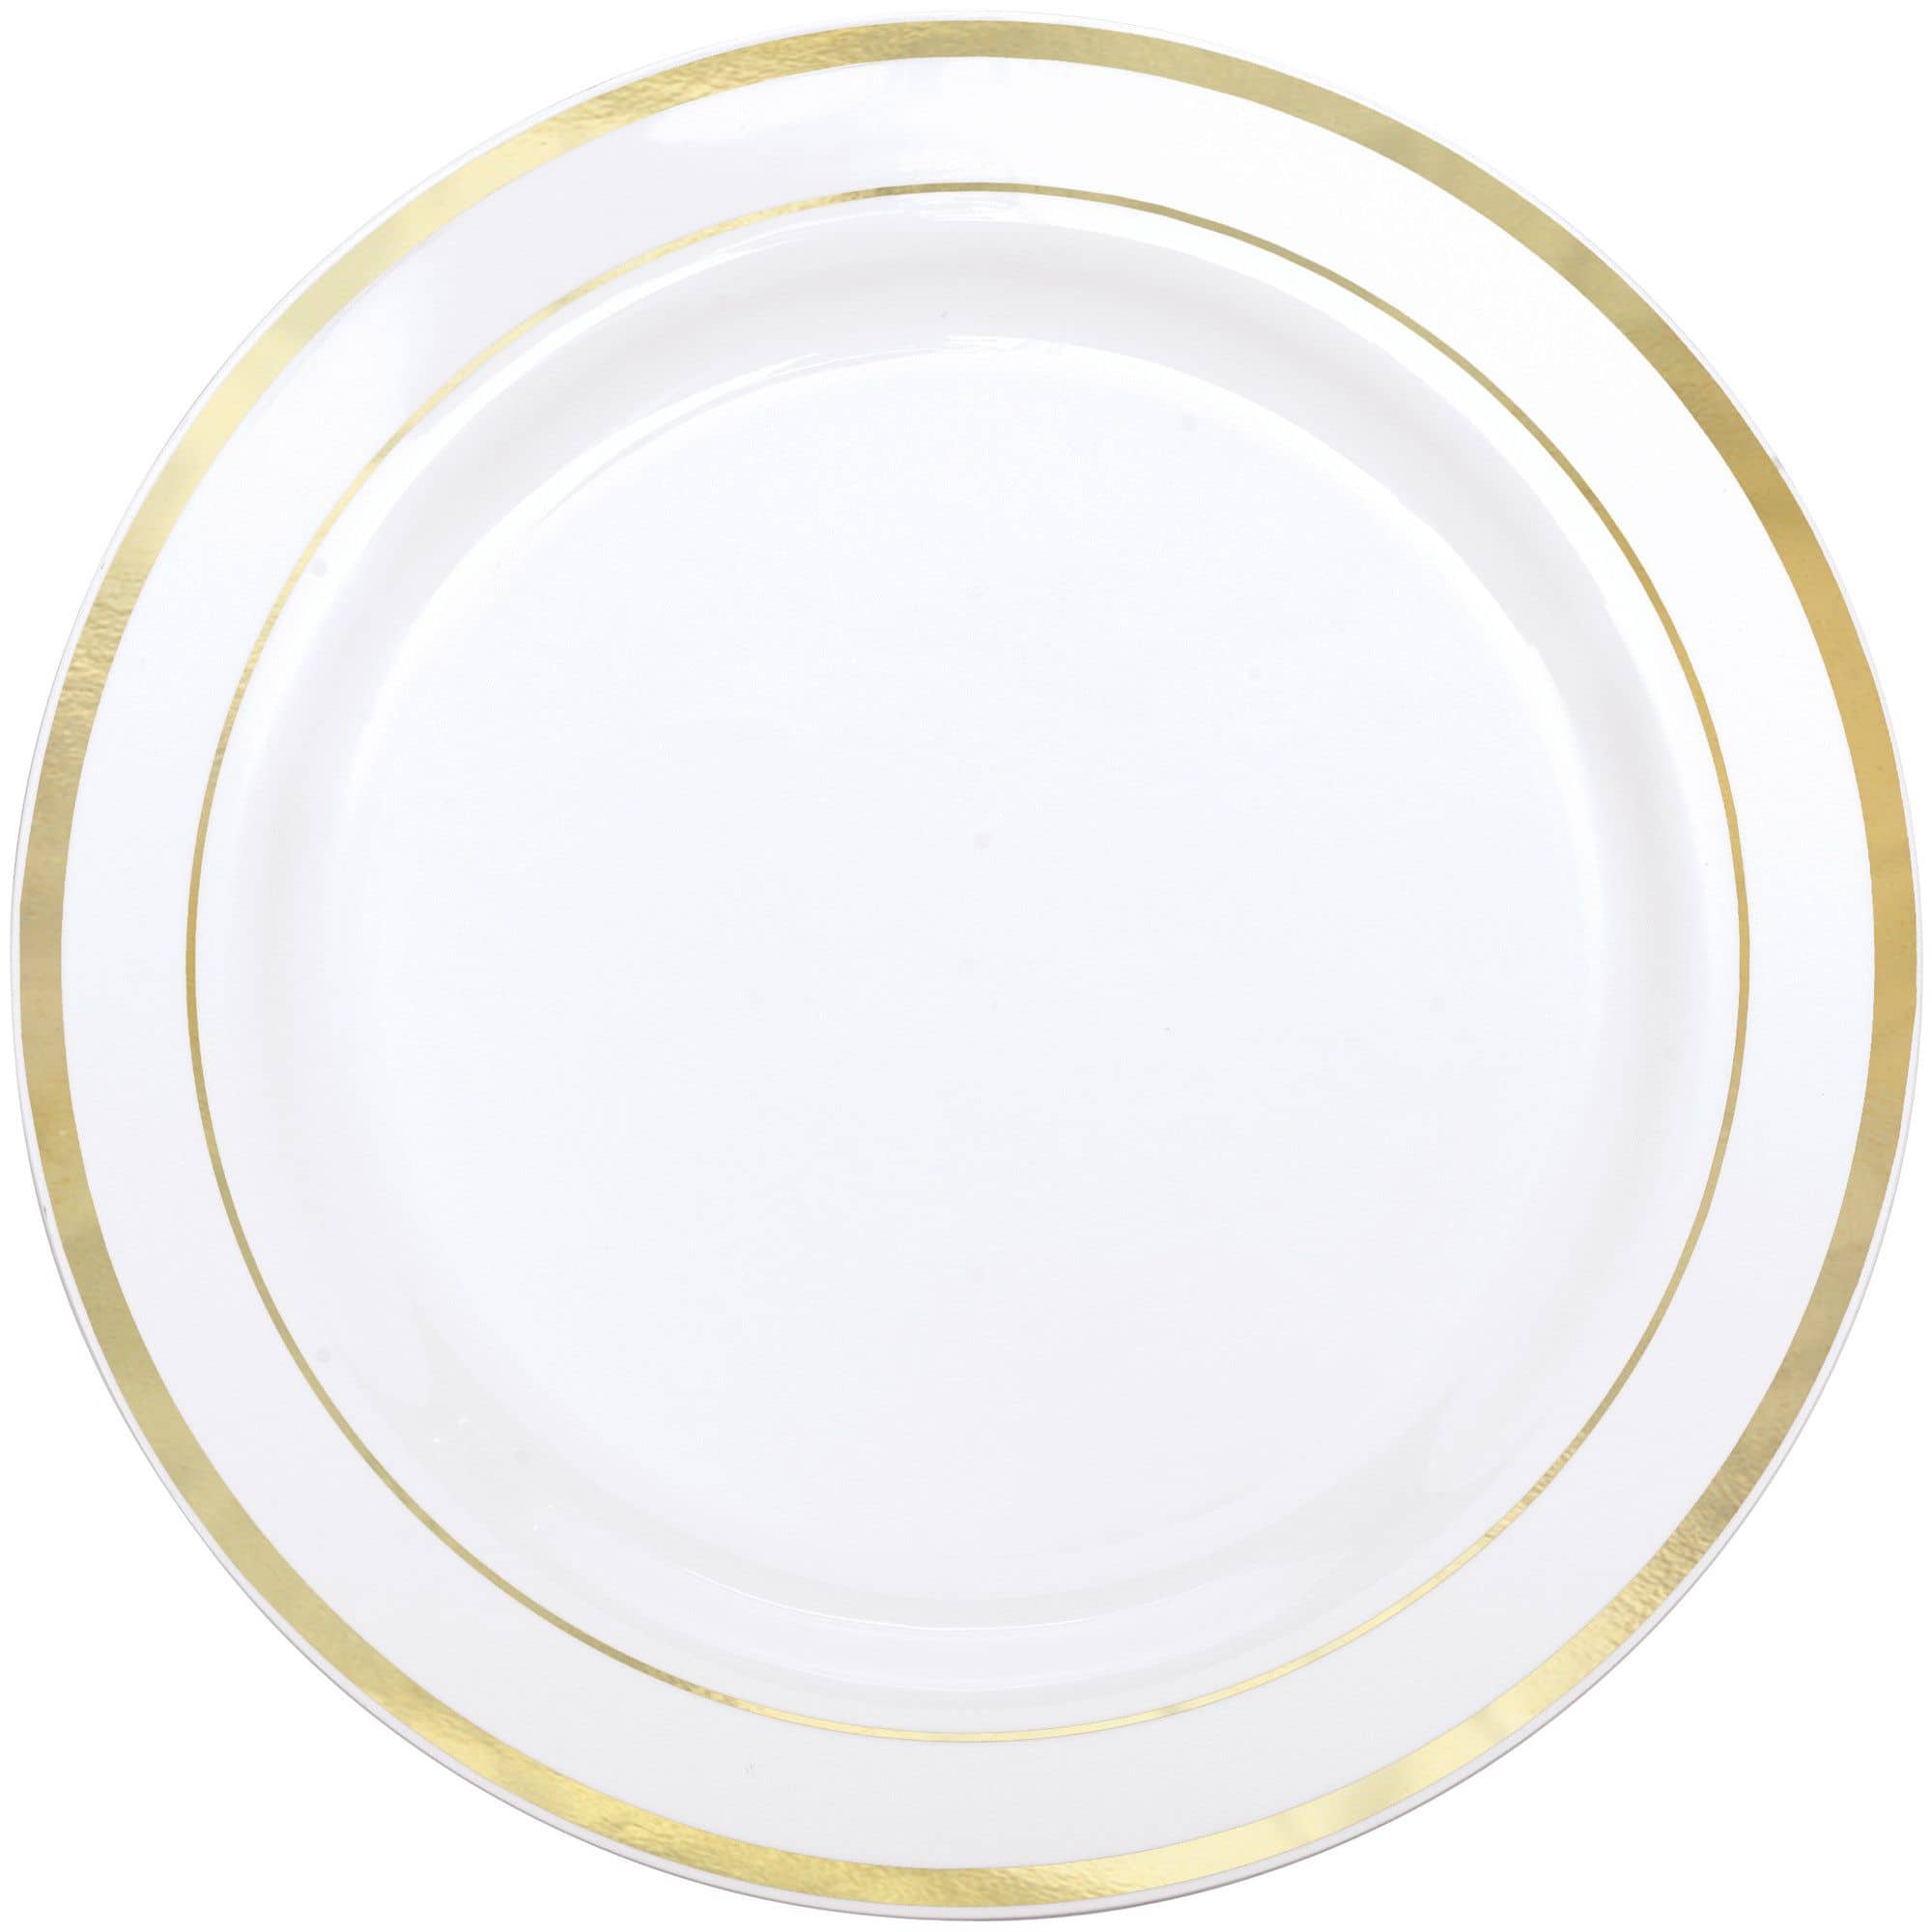 100 Piece Plastic Party Plates White Gold Rim, Premium Heavy Duty